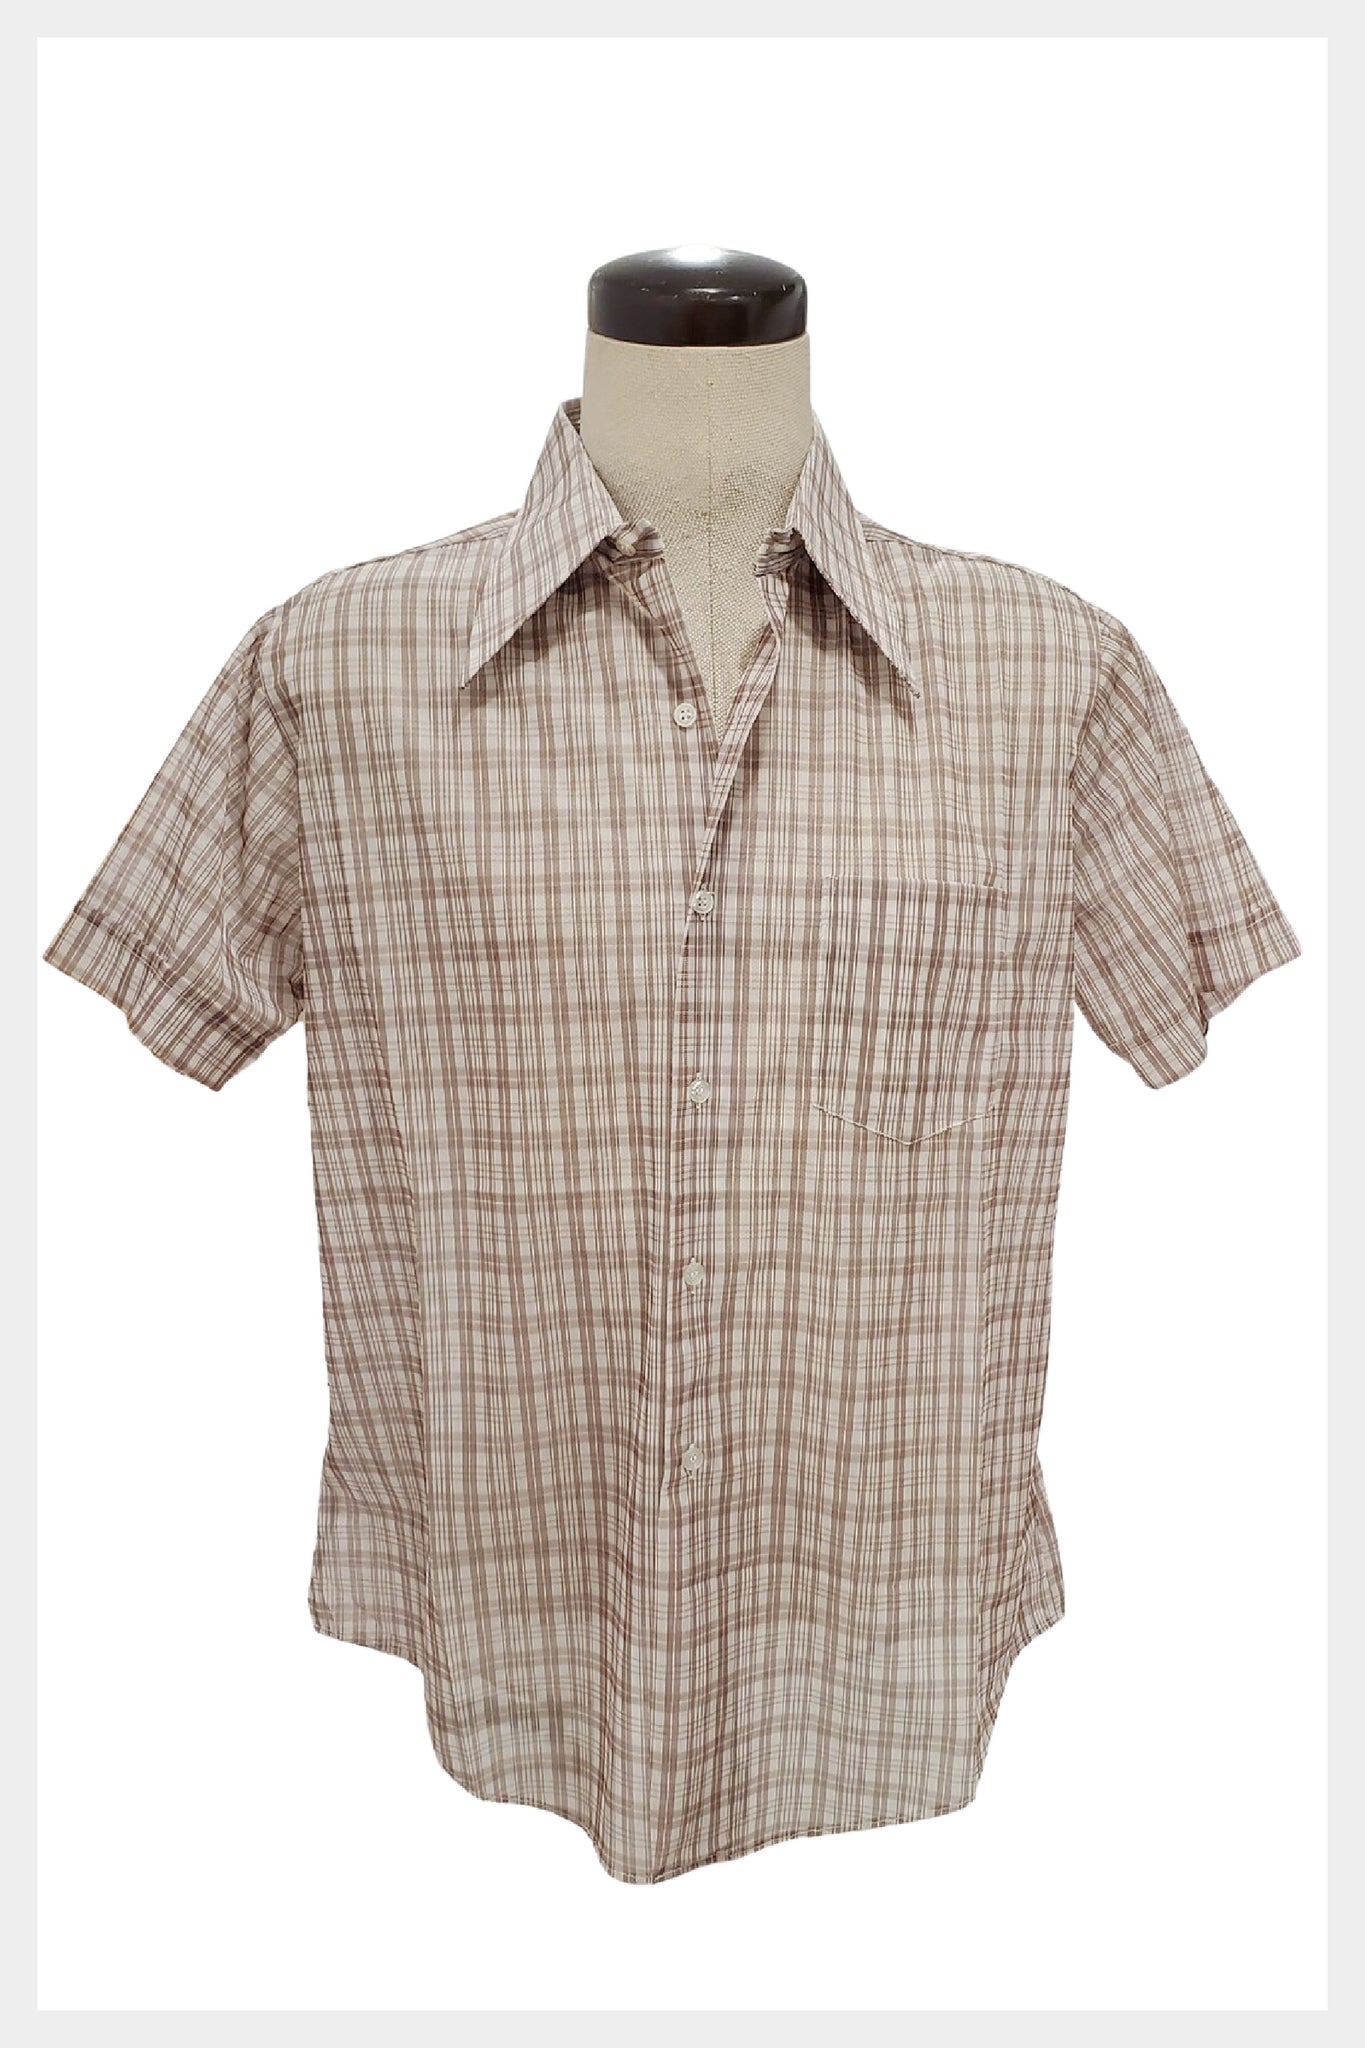 1970s light brown plaid shirt | large - x large